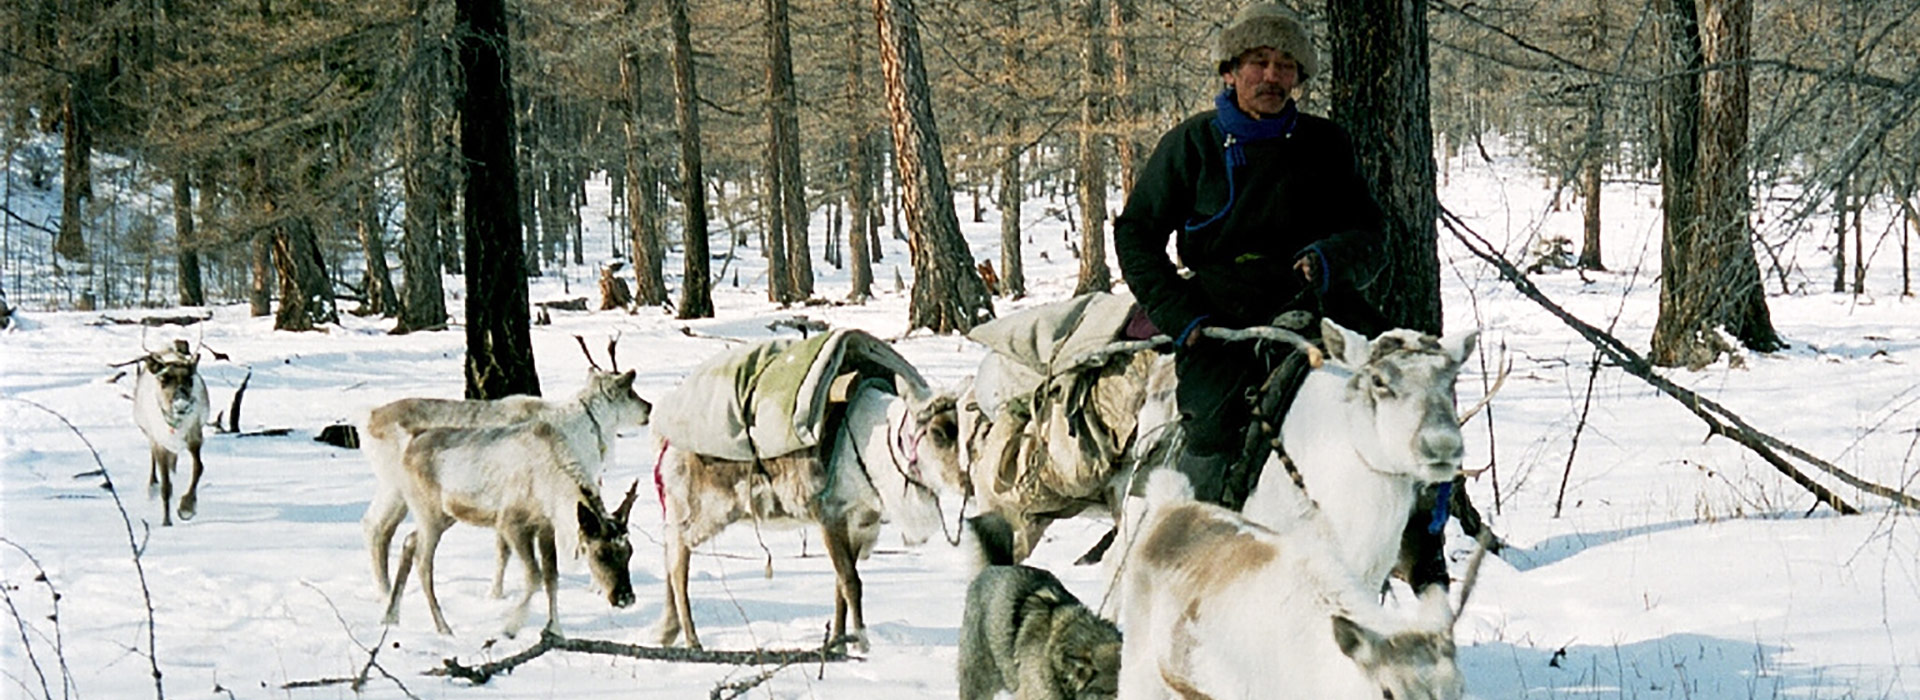 mongolian-reindeer-herders